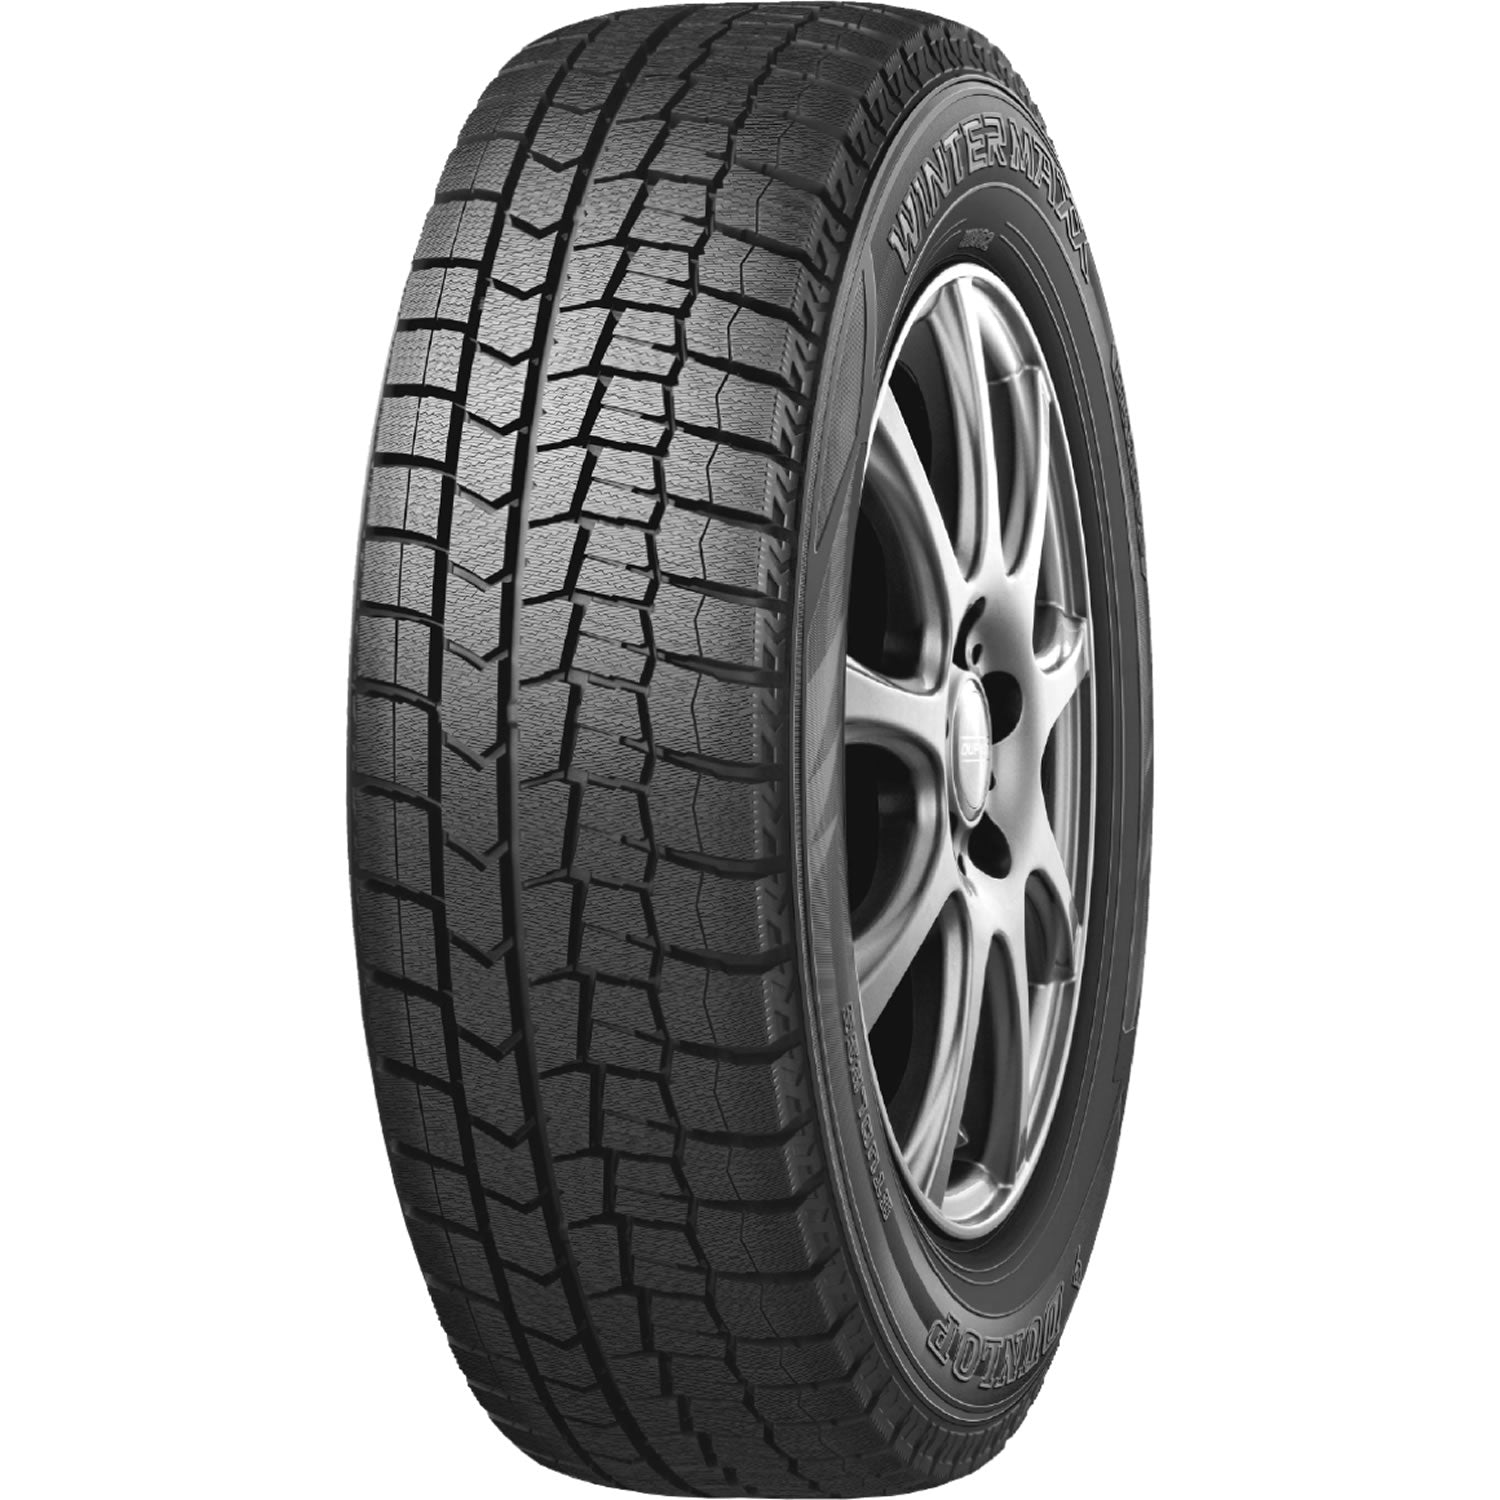 DUNLOP WINTER MAXX 2 205/50R17 (25.1X8.4R 17) Tires